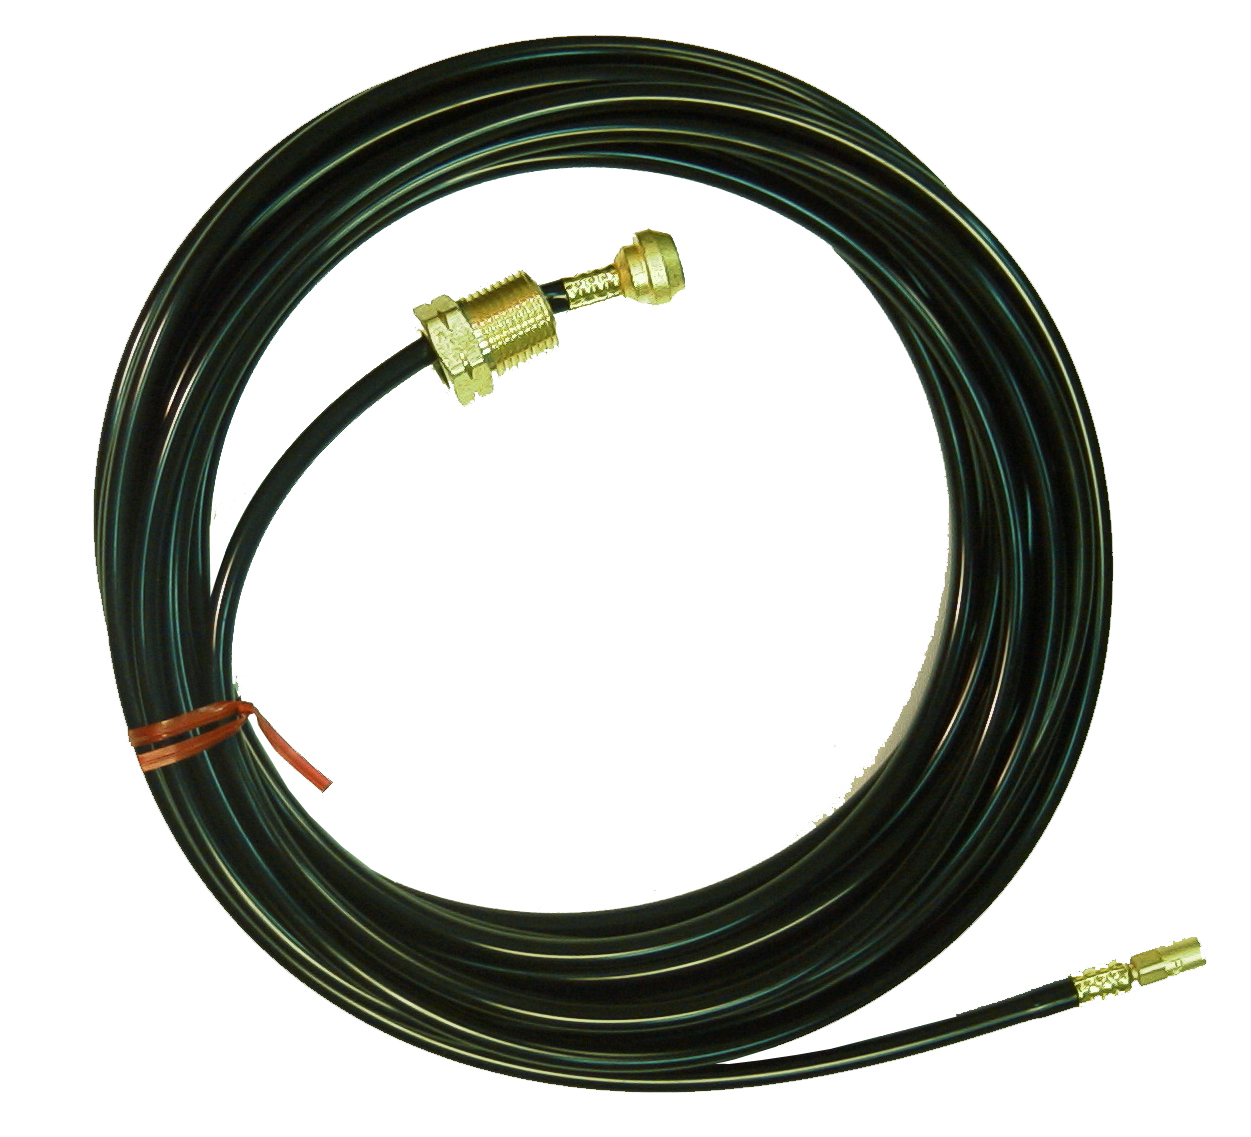 Weldmark by CK Worldwide Vinyl Power Cable, 25 ft, TW20/24W